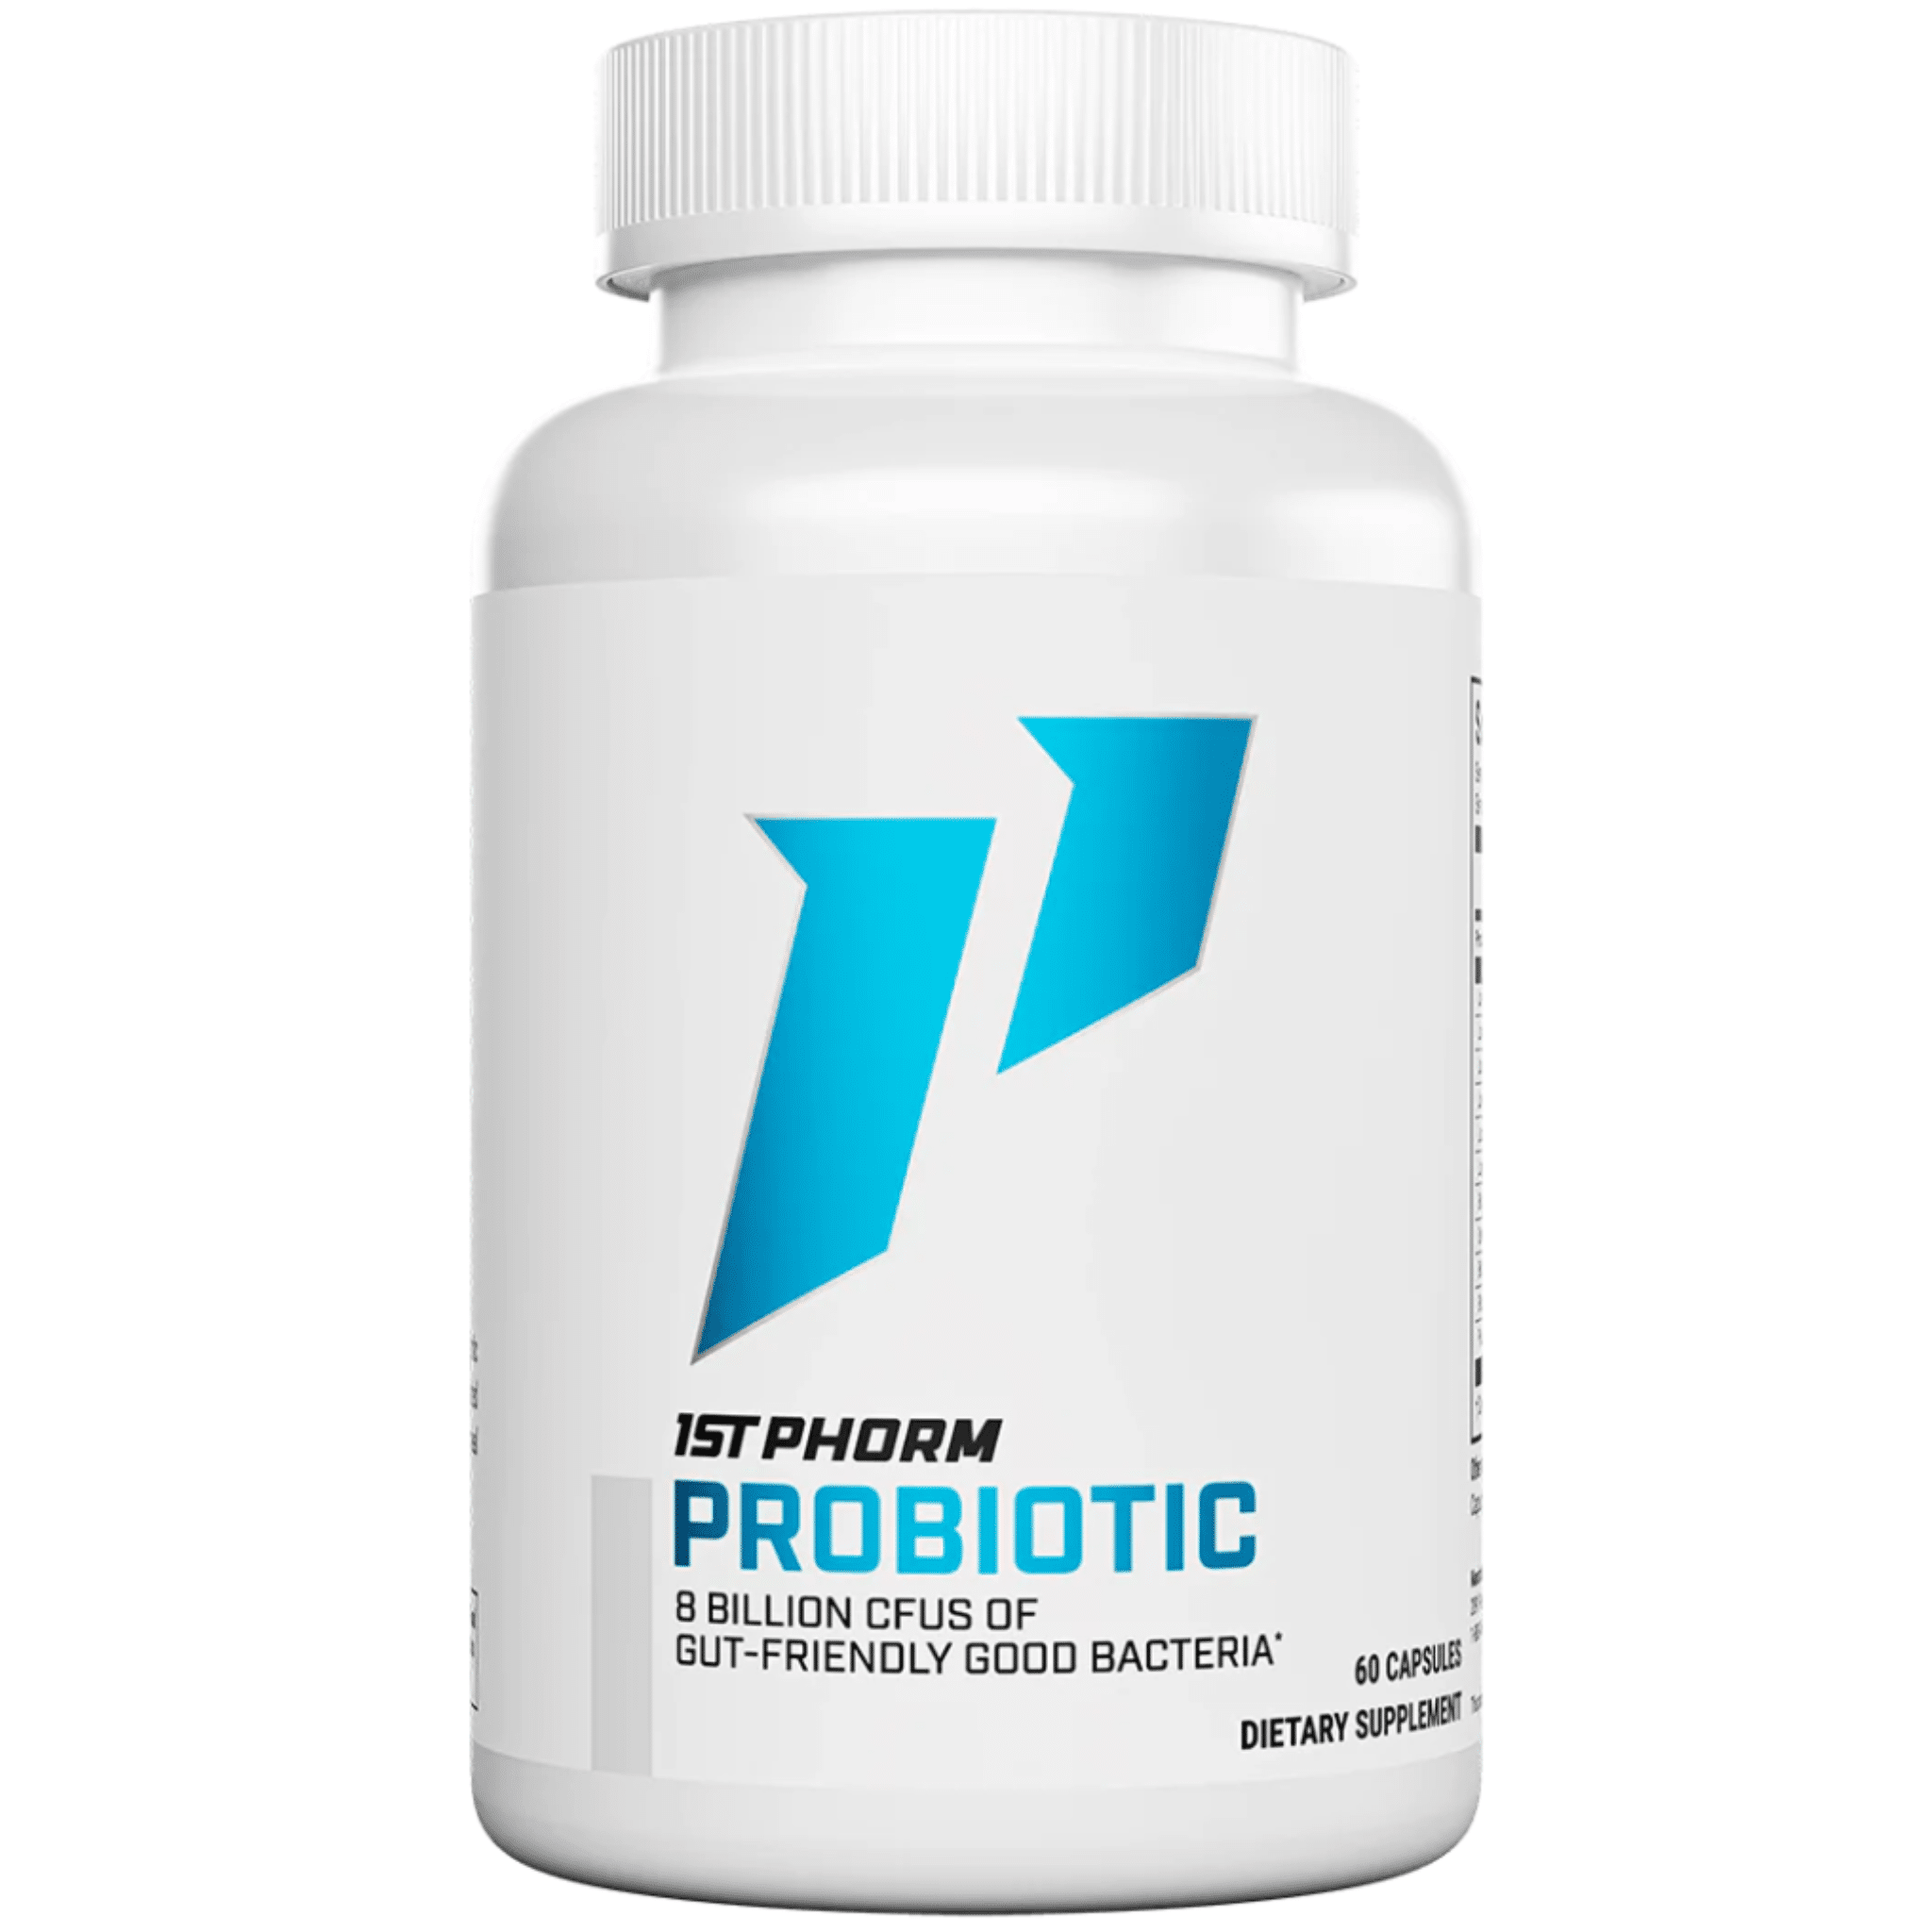 1st Phorm Probiotic